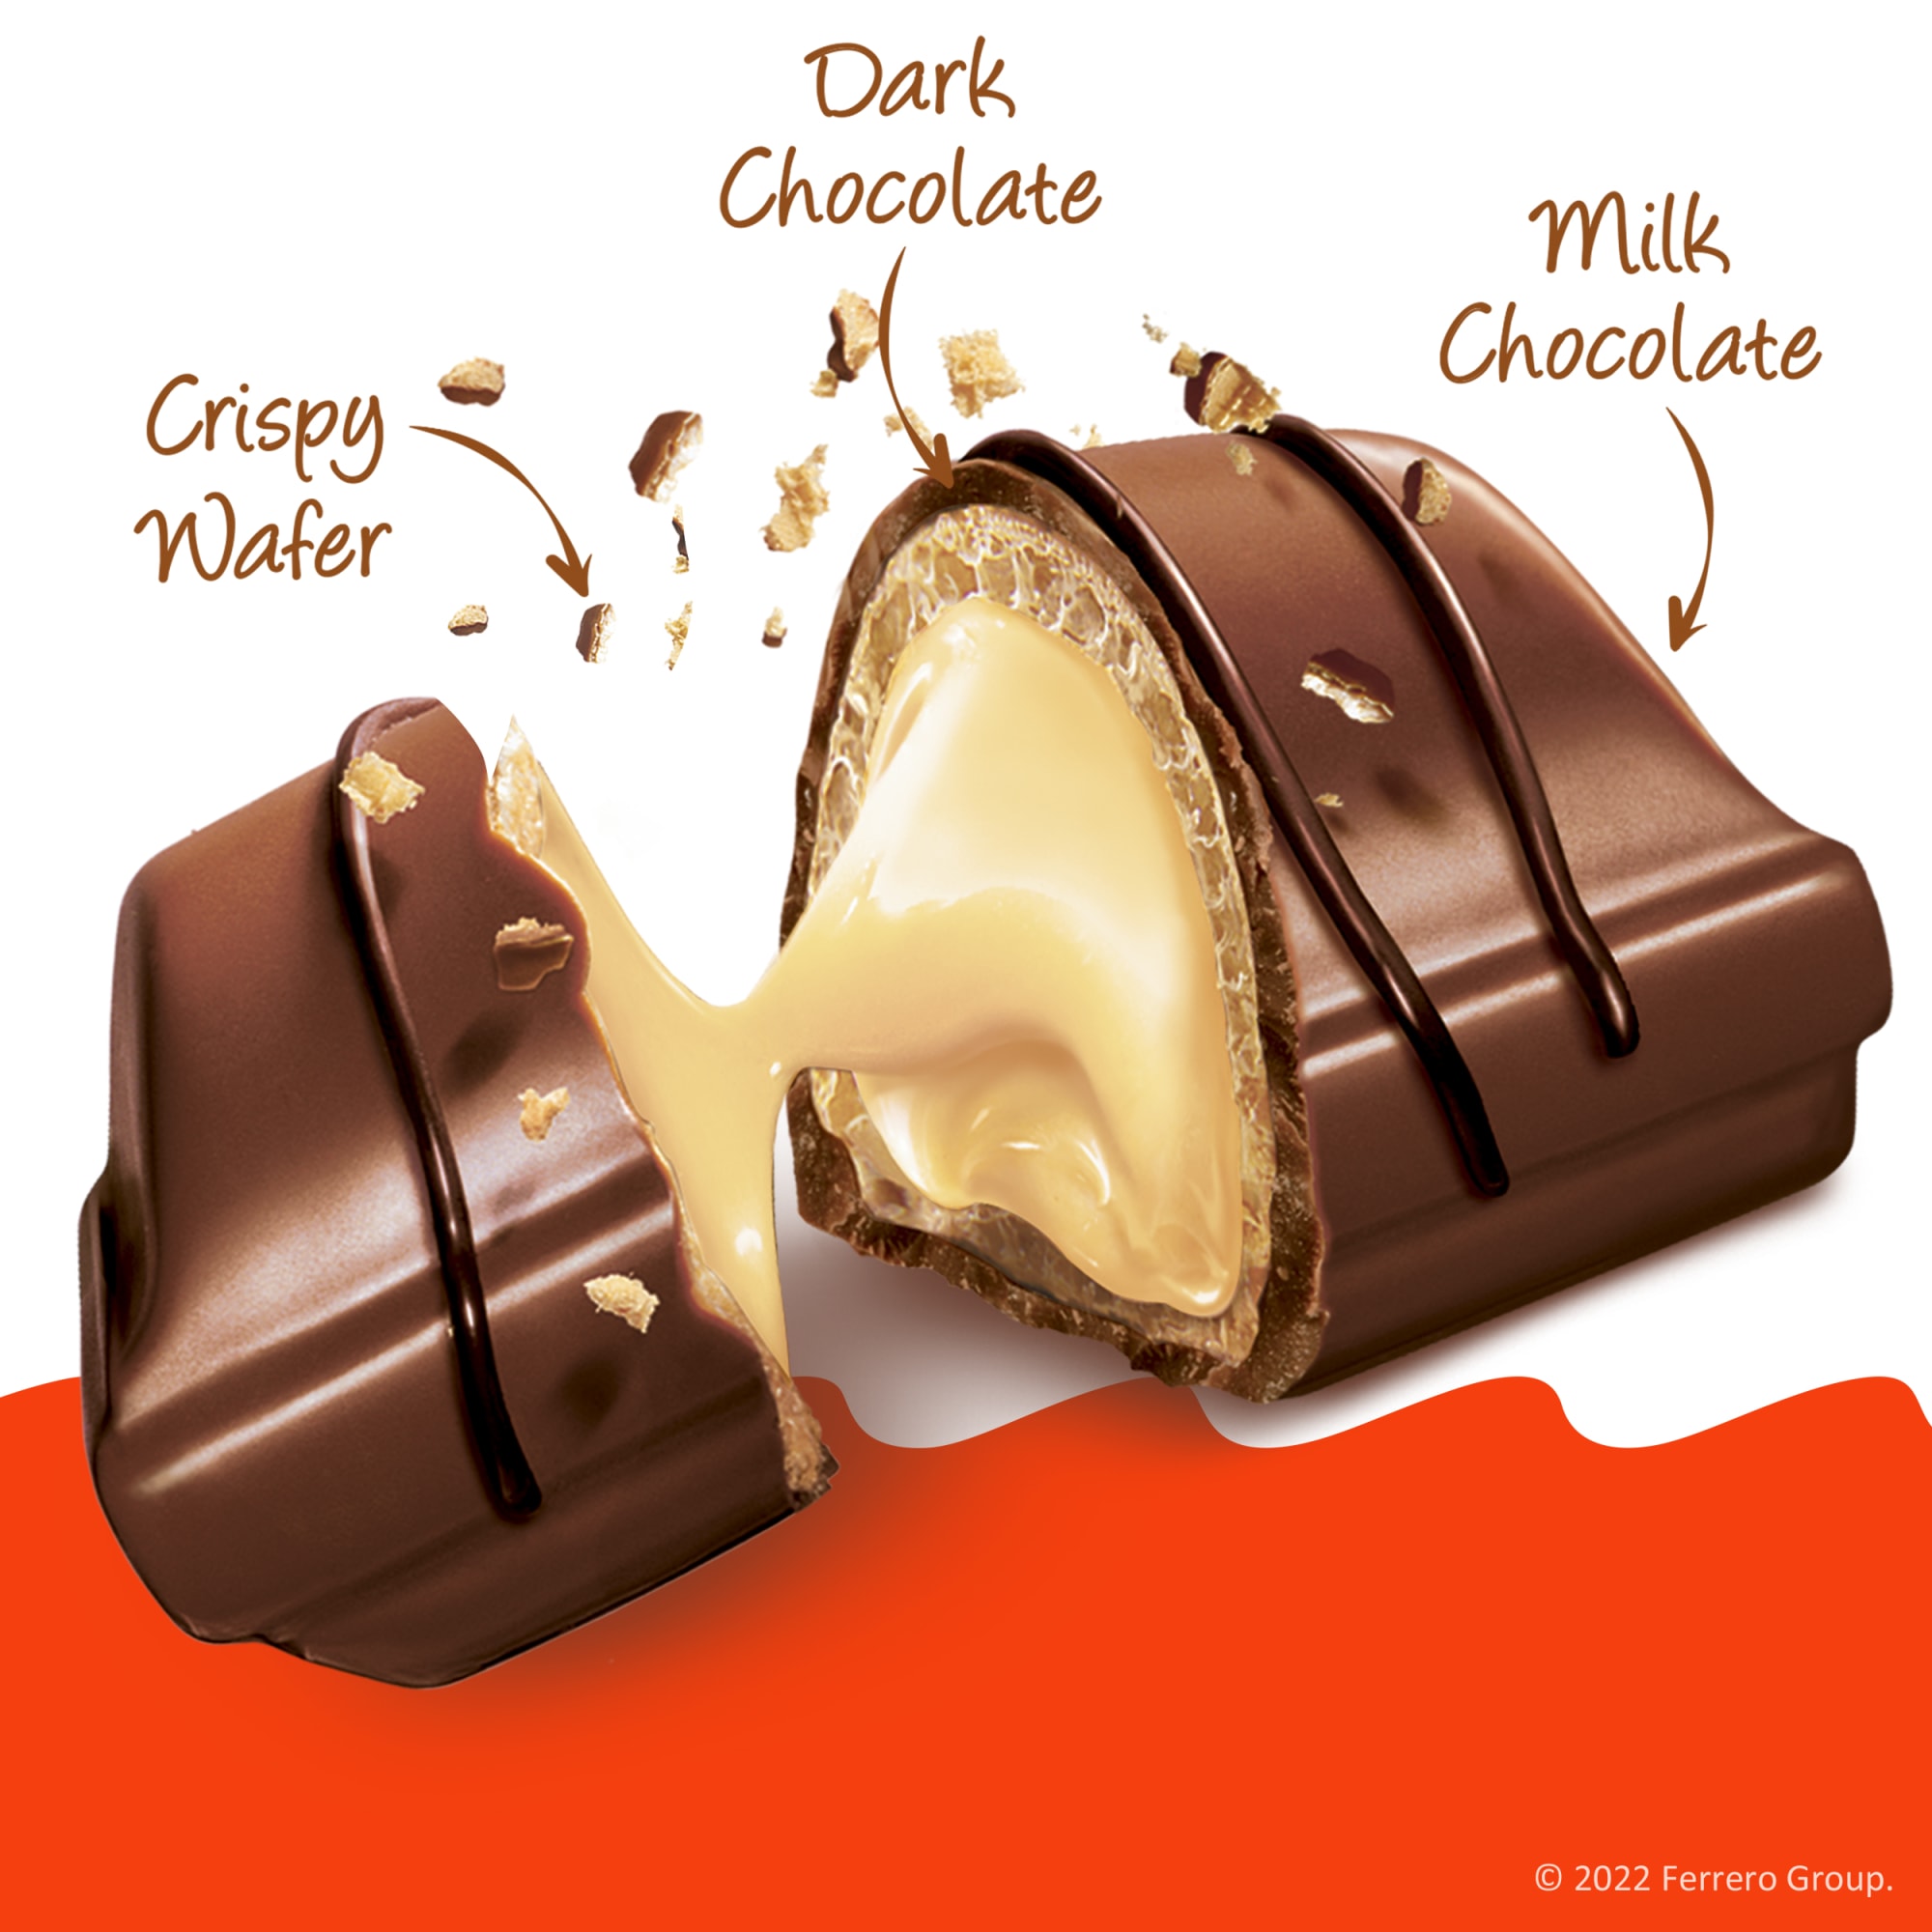 Kinder Bueno Mini, Milk Chocolate and Hazelnut Cream, Wrapped, Share Size, 5.7 oz - image 3 of 10